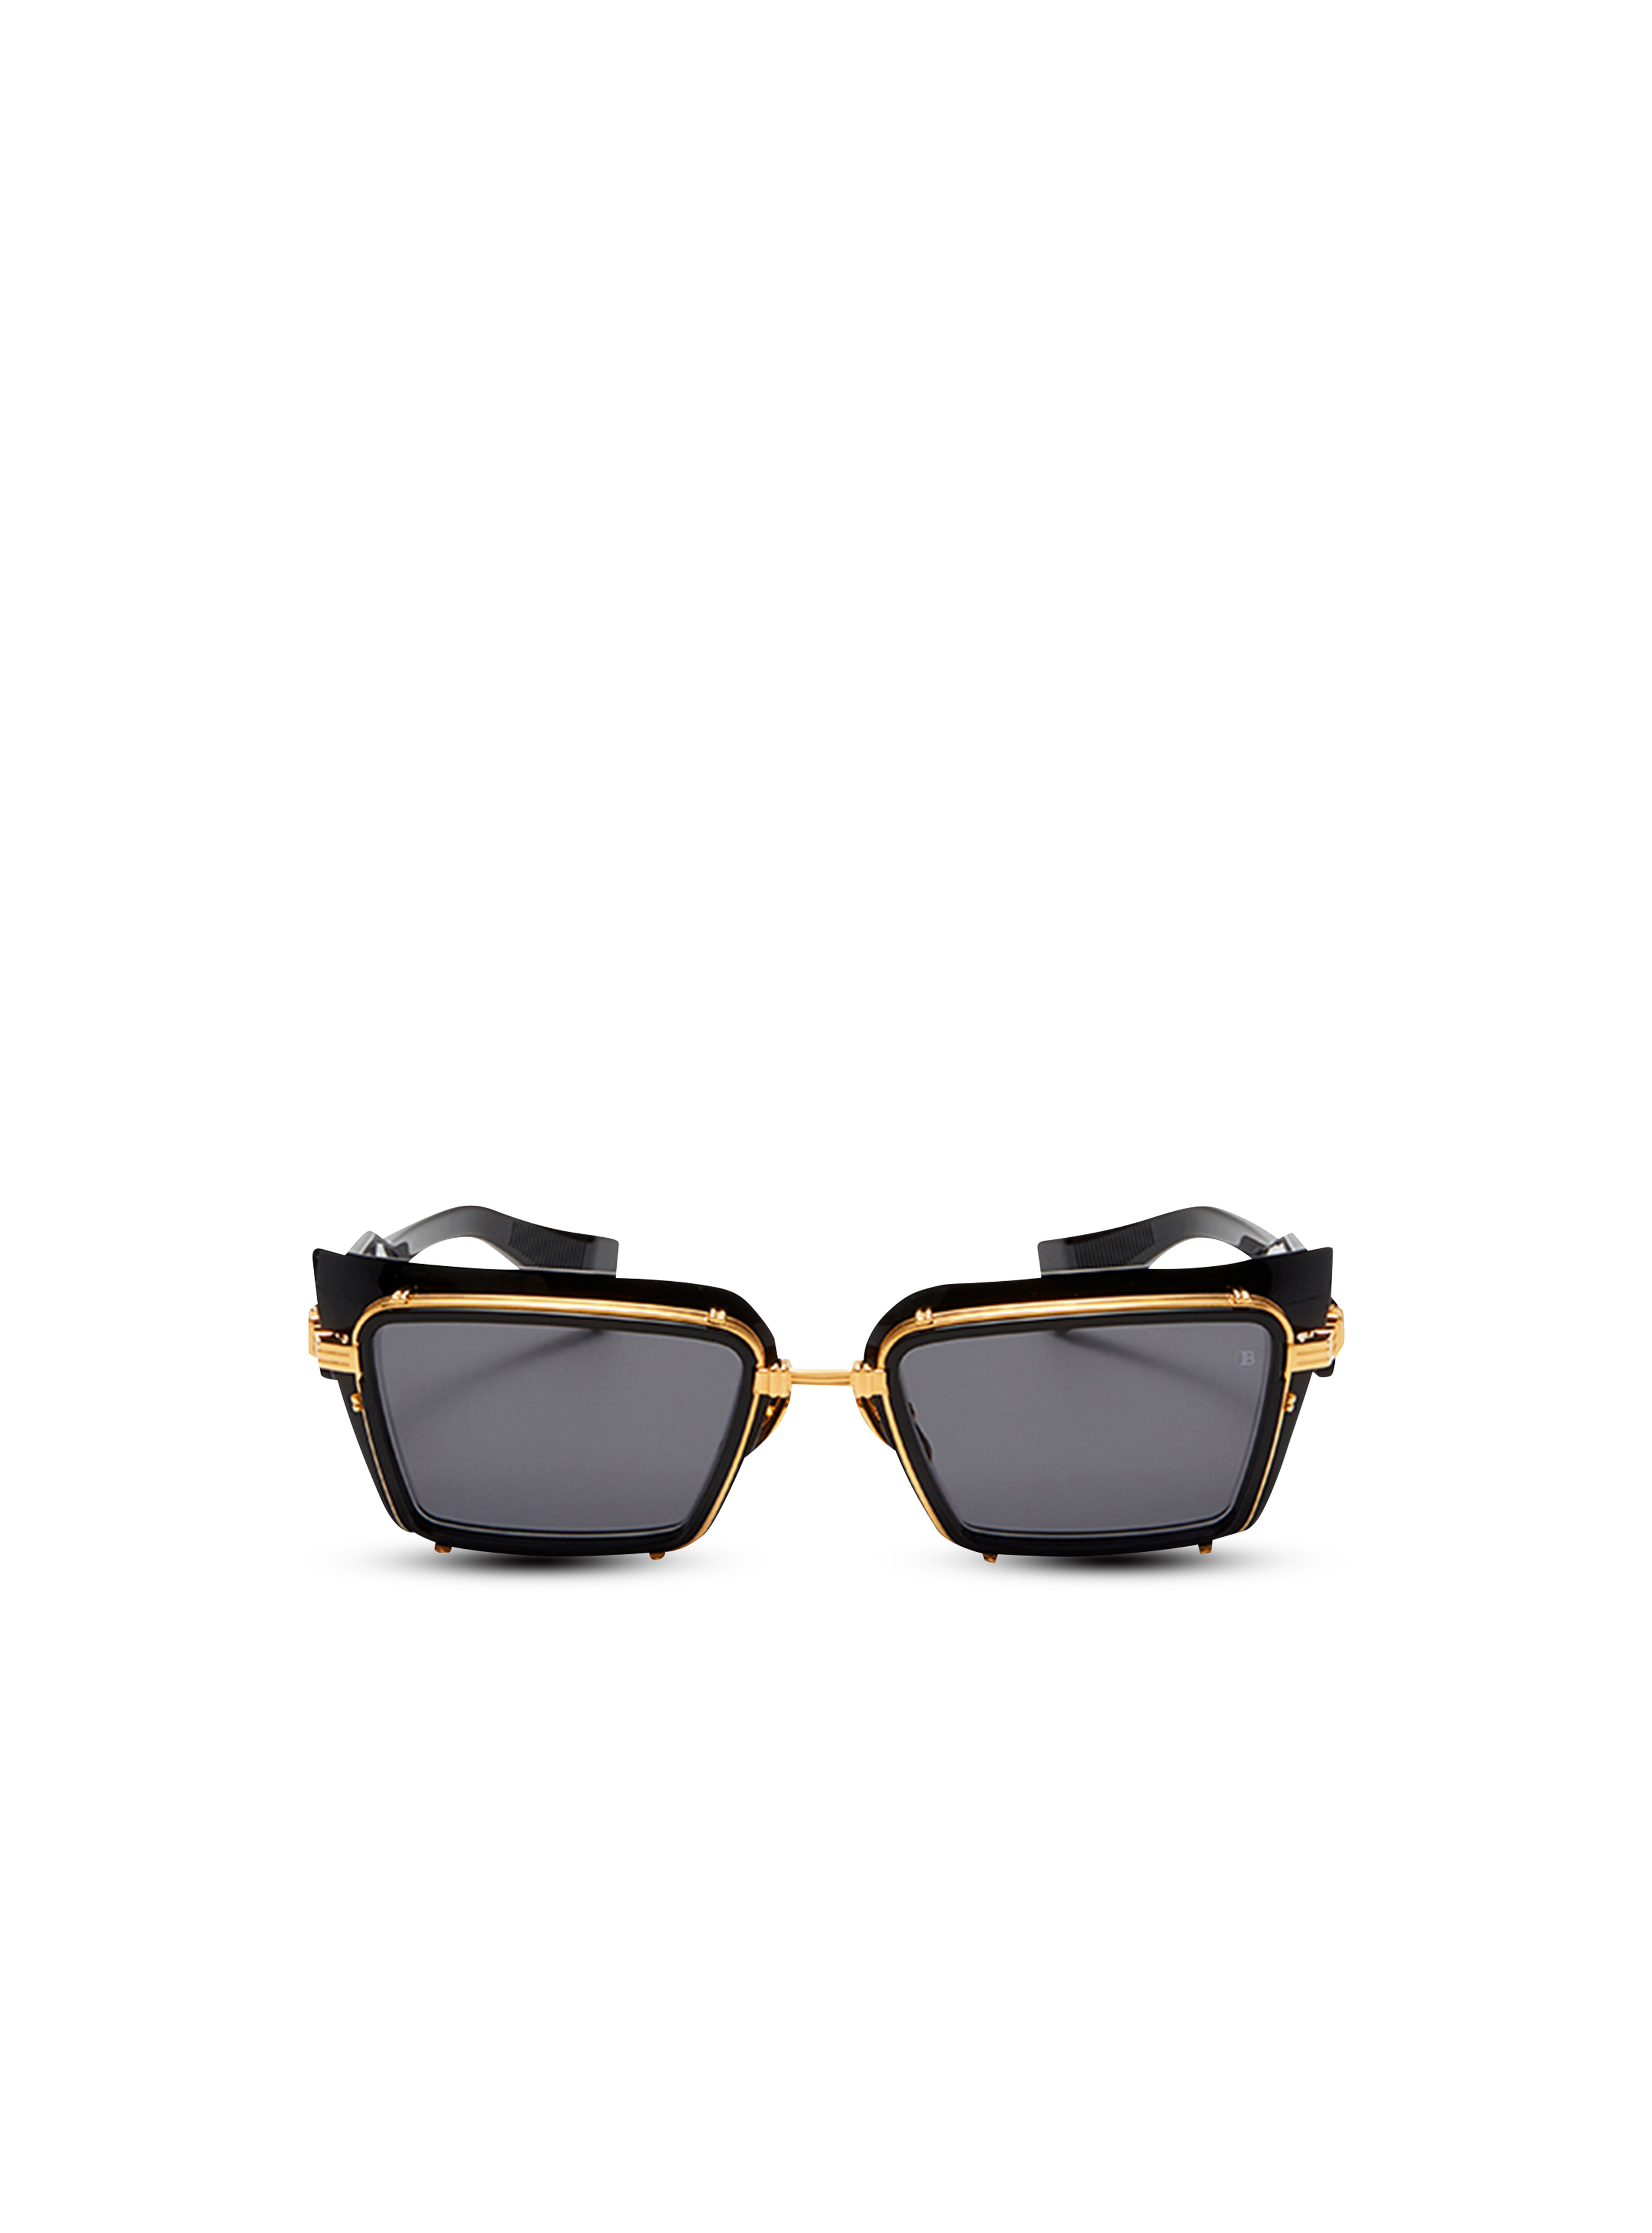 Admirable sunglasses, black